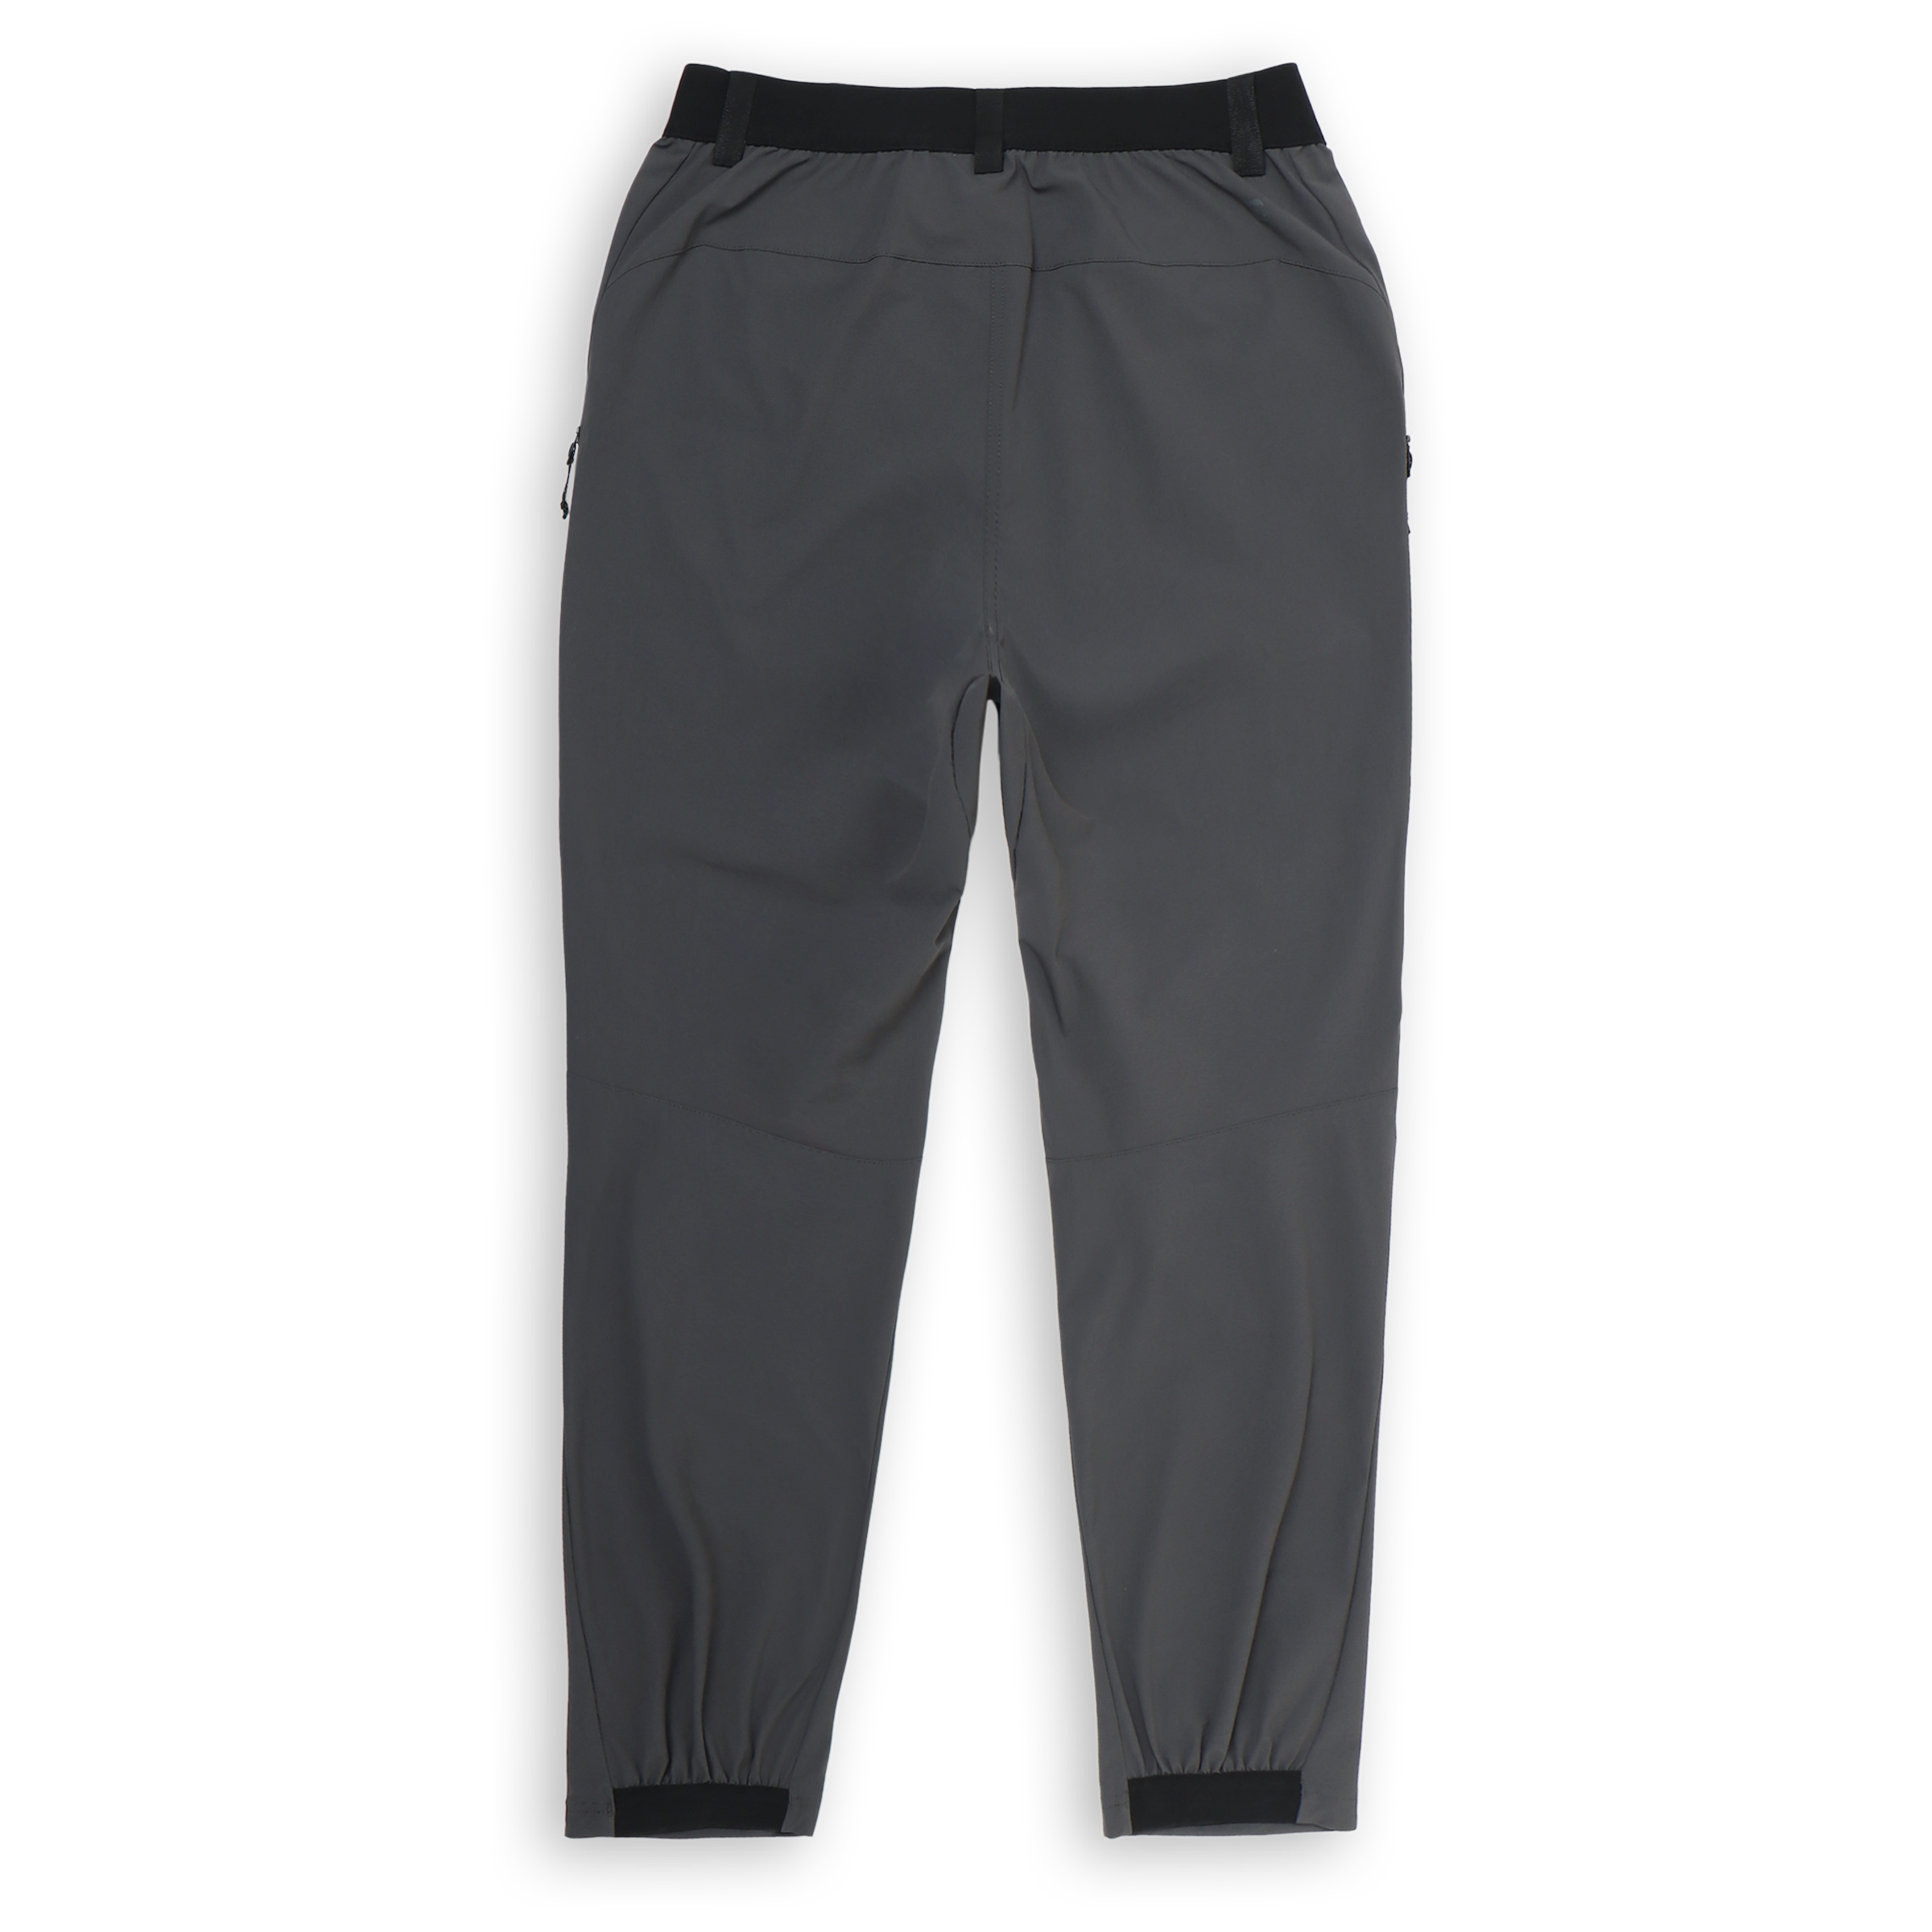 Trail Pant Coal Back with elastic waistband, belt loops, and back ankle elastic hem